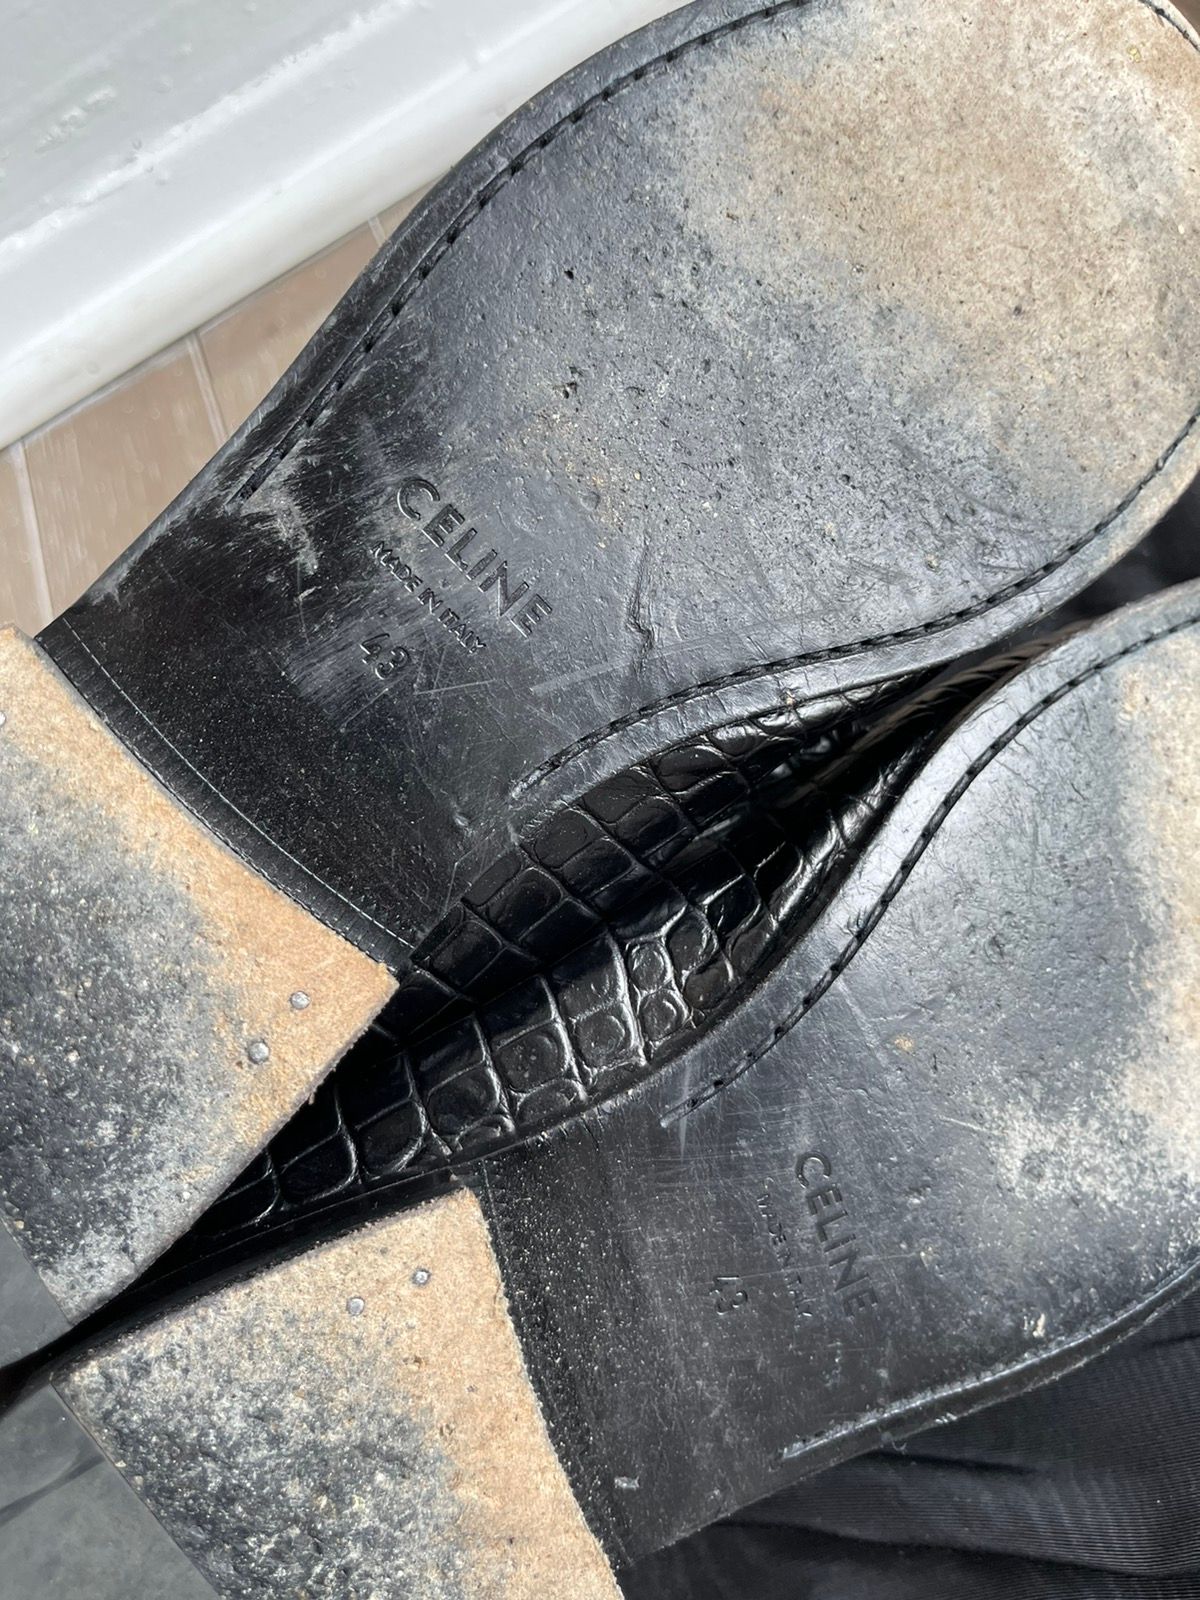 Celine SS20 Hedi Black Leather Croc Loafers Shoes EU43